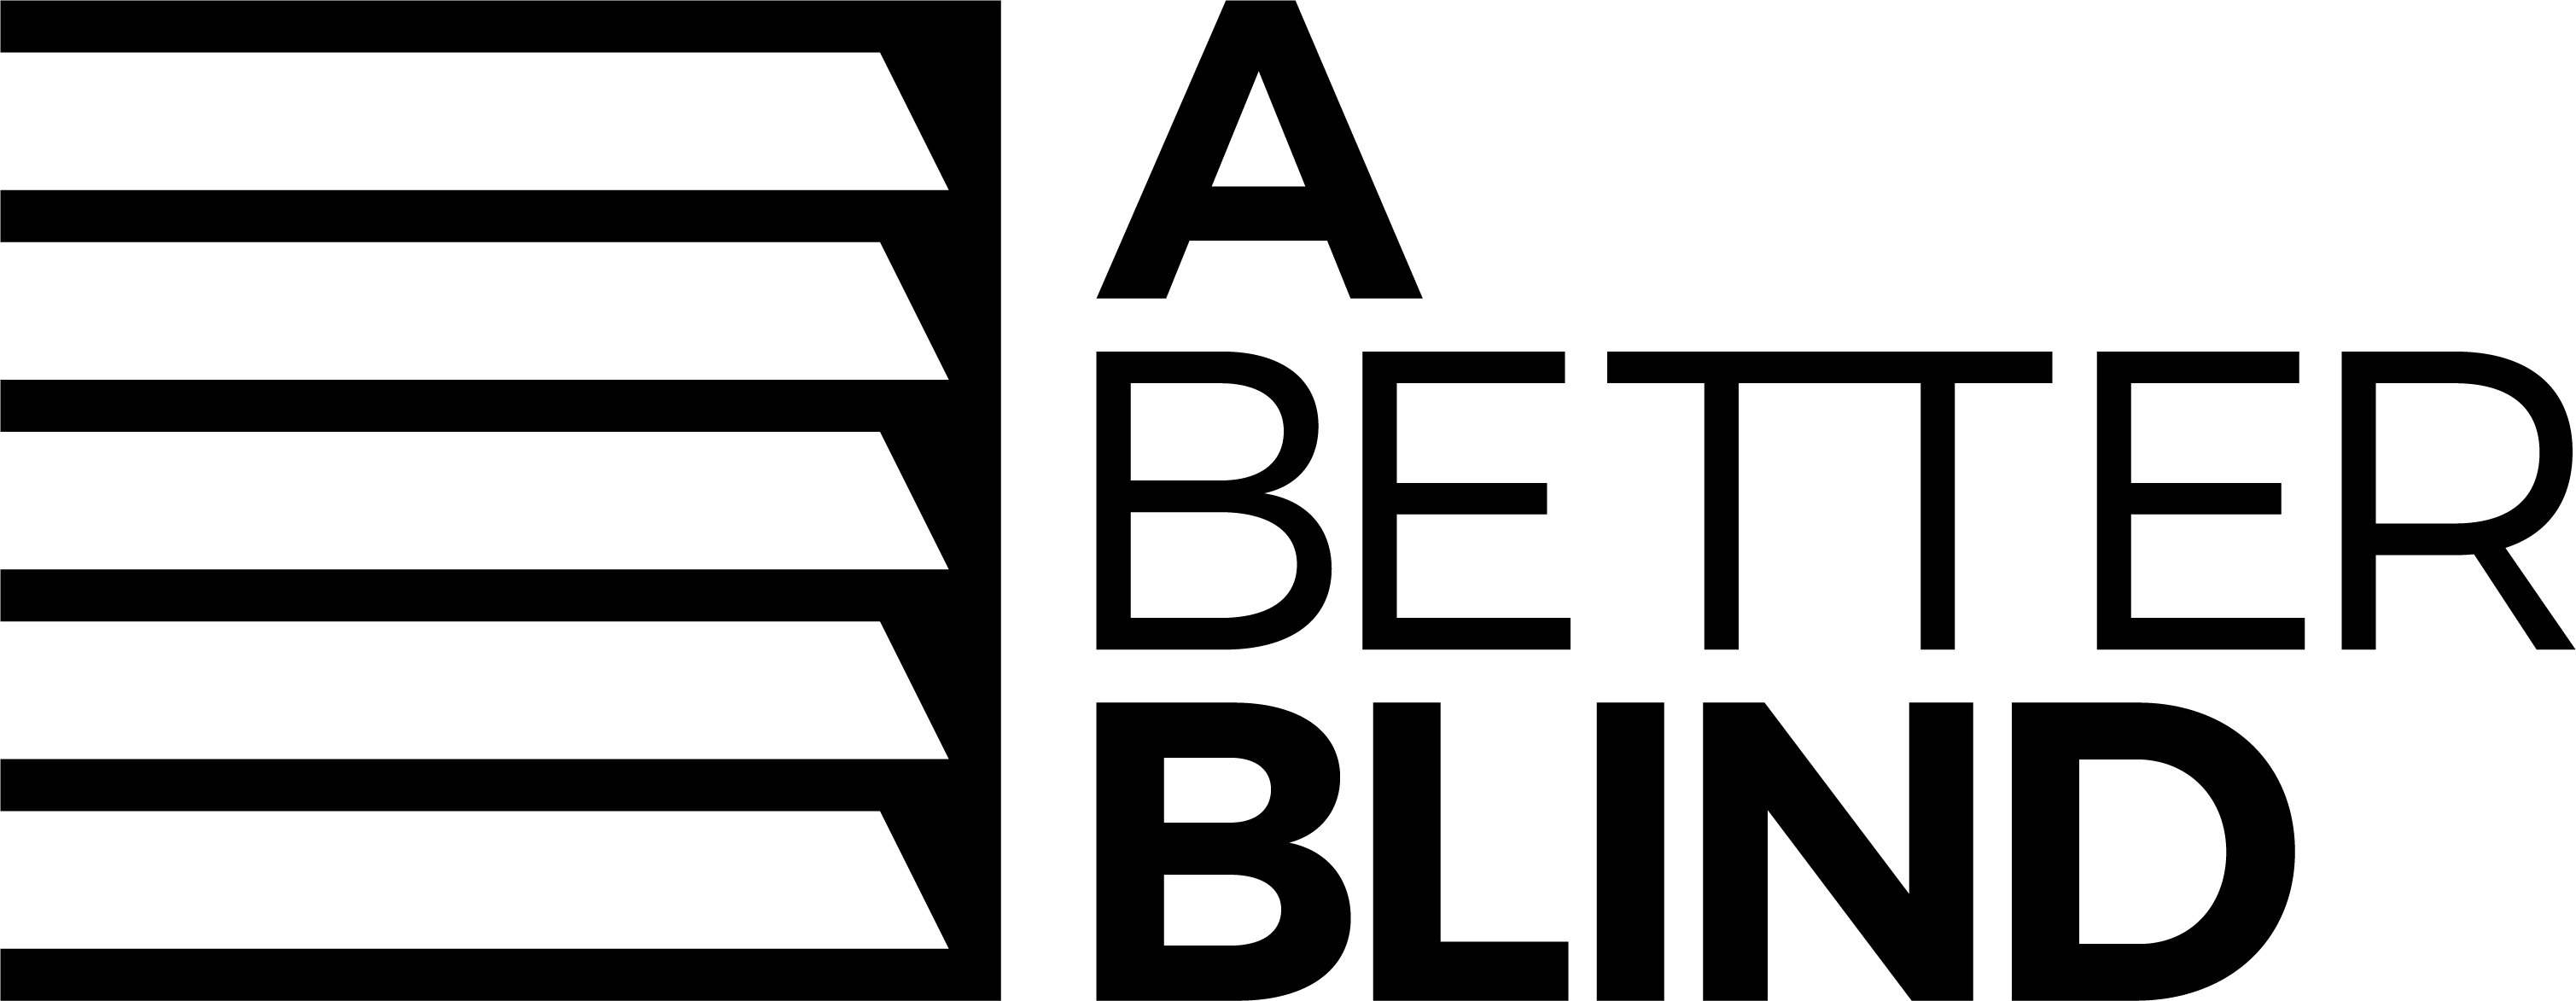 ABB-logo-black